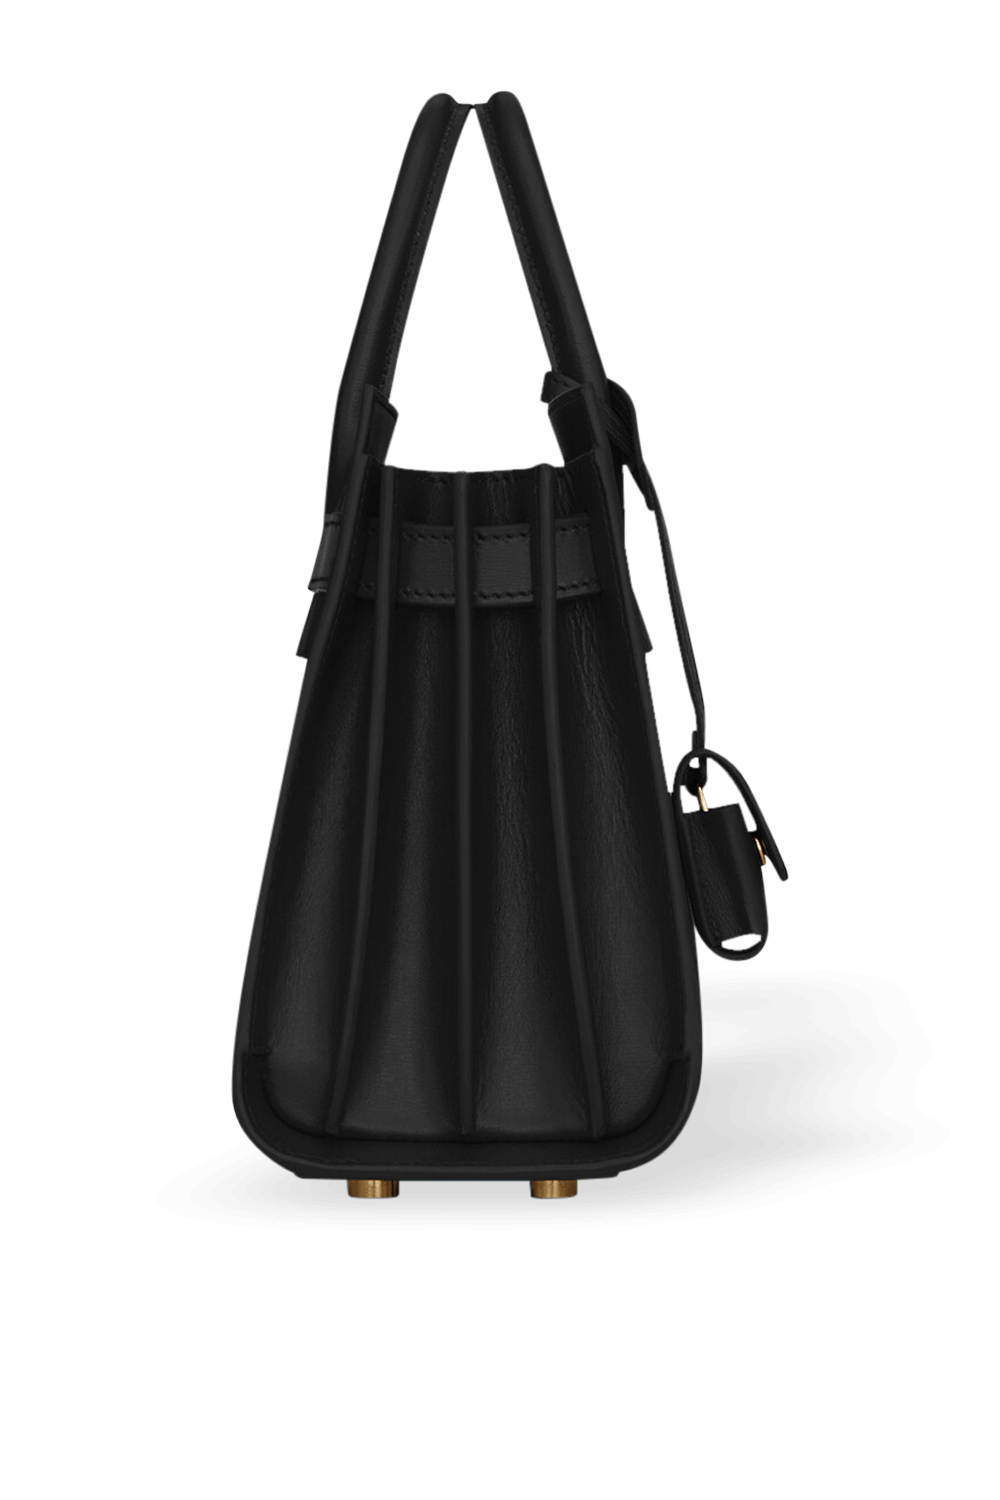 Classic Sac De Jour Nano  Hand Bag in Black SAINT LAURENT